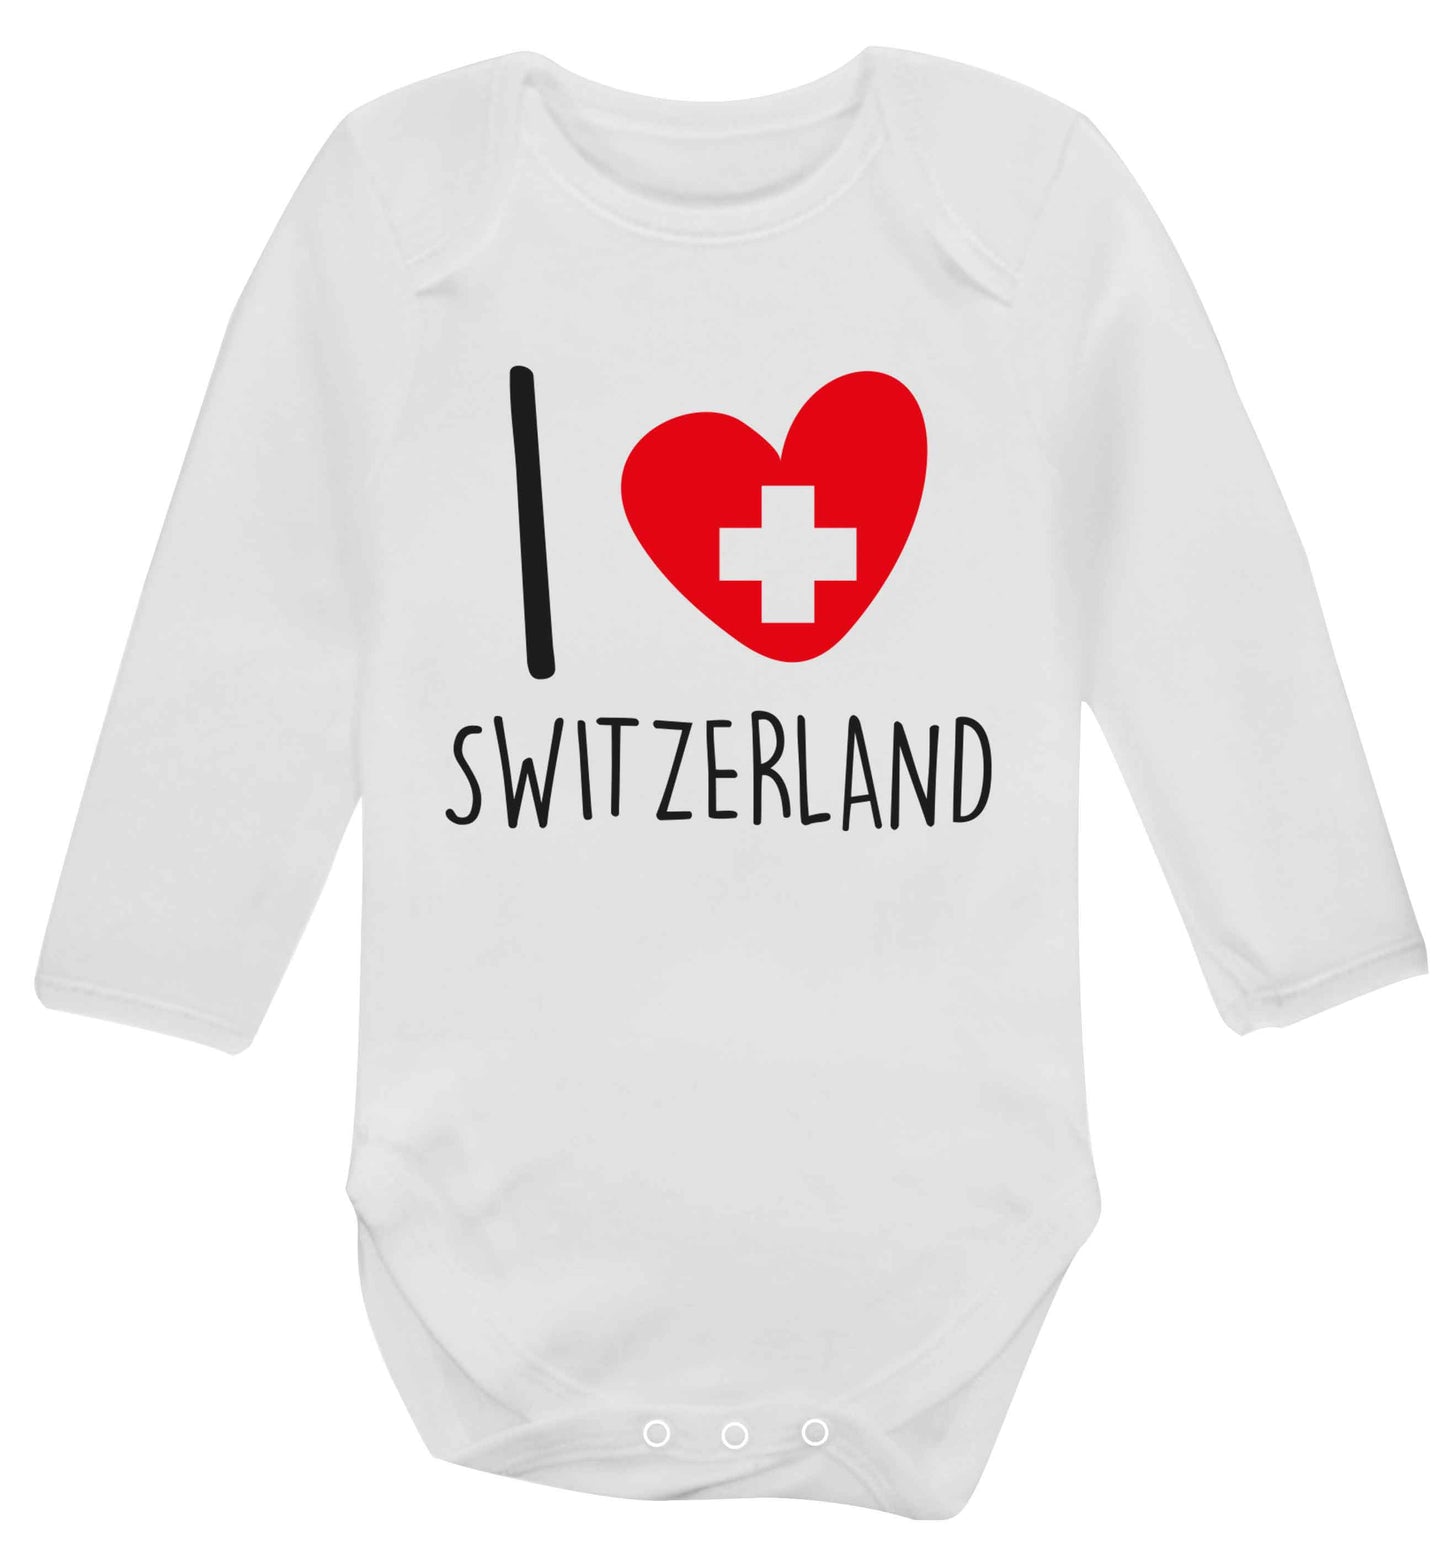 I love switzerland Baby Vest long sleeved white 6-12 months